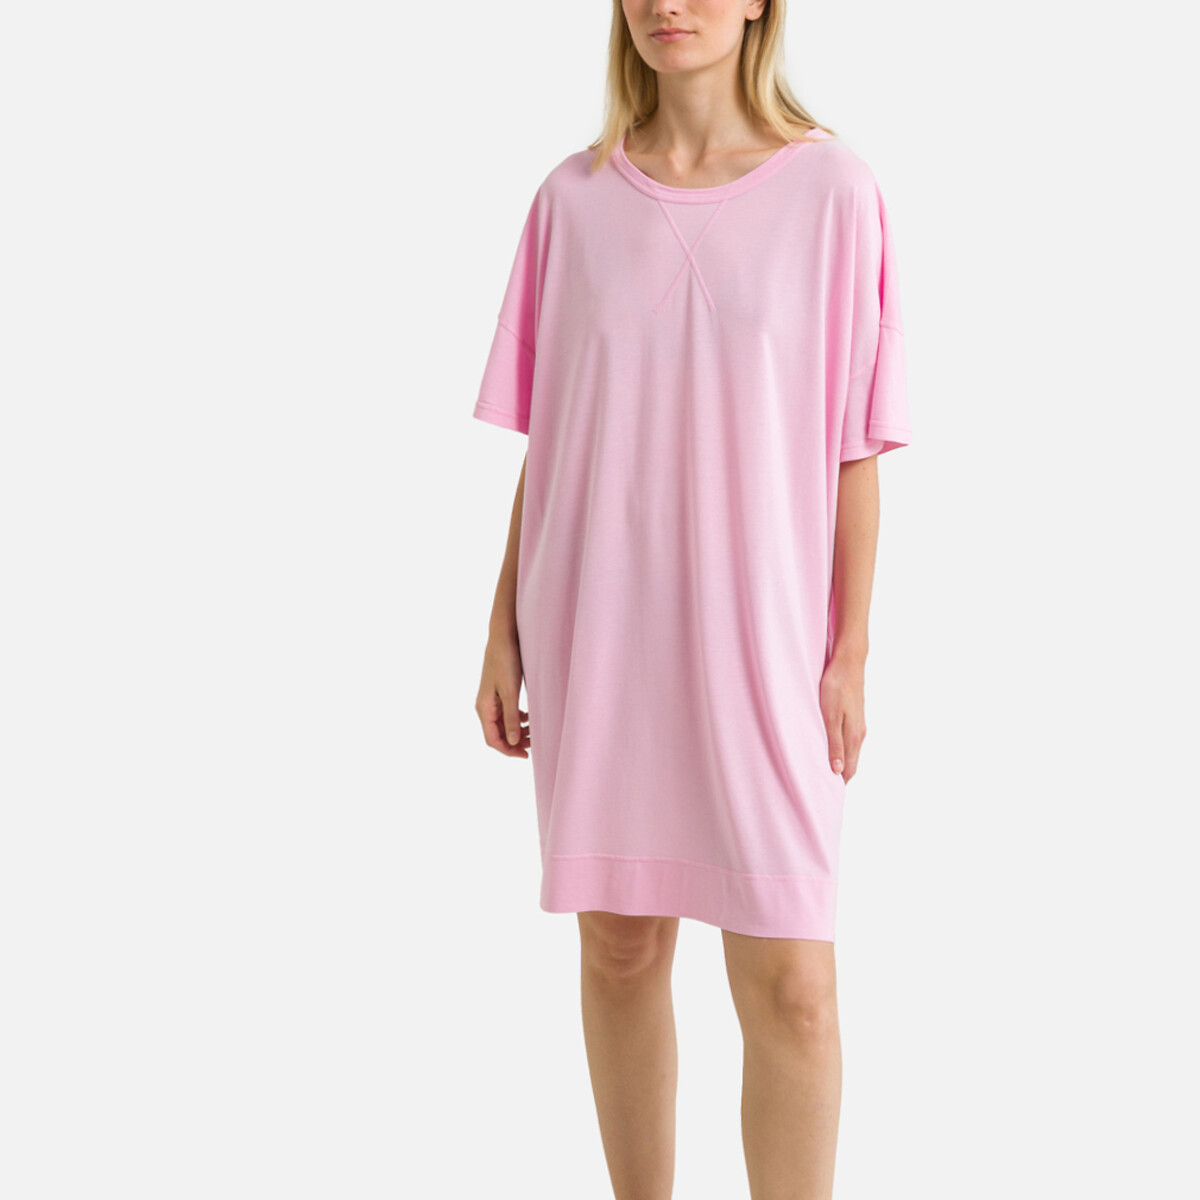 Прямое Платье-майка короткие рукава TUKYBAY XS/S розовый LaRedoute, размер XS/S Прямое Платье-майка короткие рукава TUKYBAY XS/S розовый - фото 1